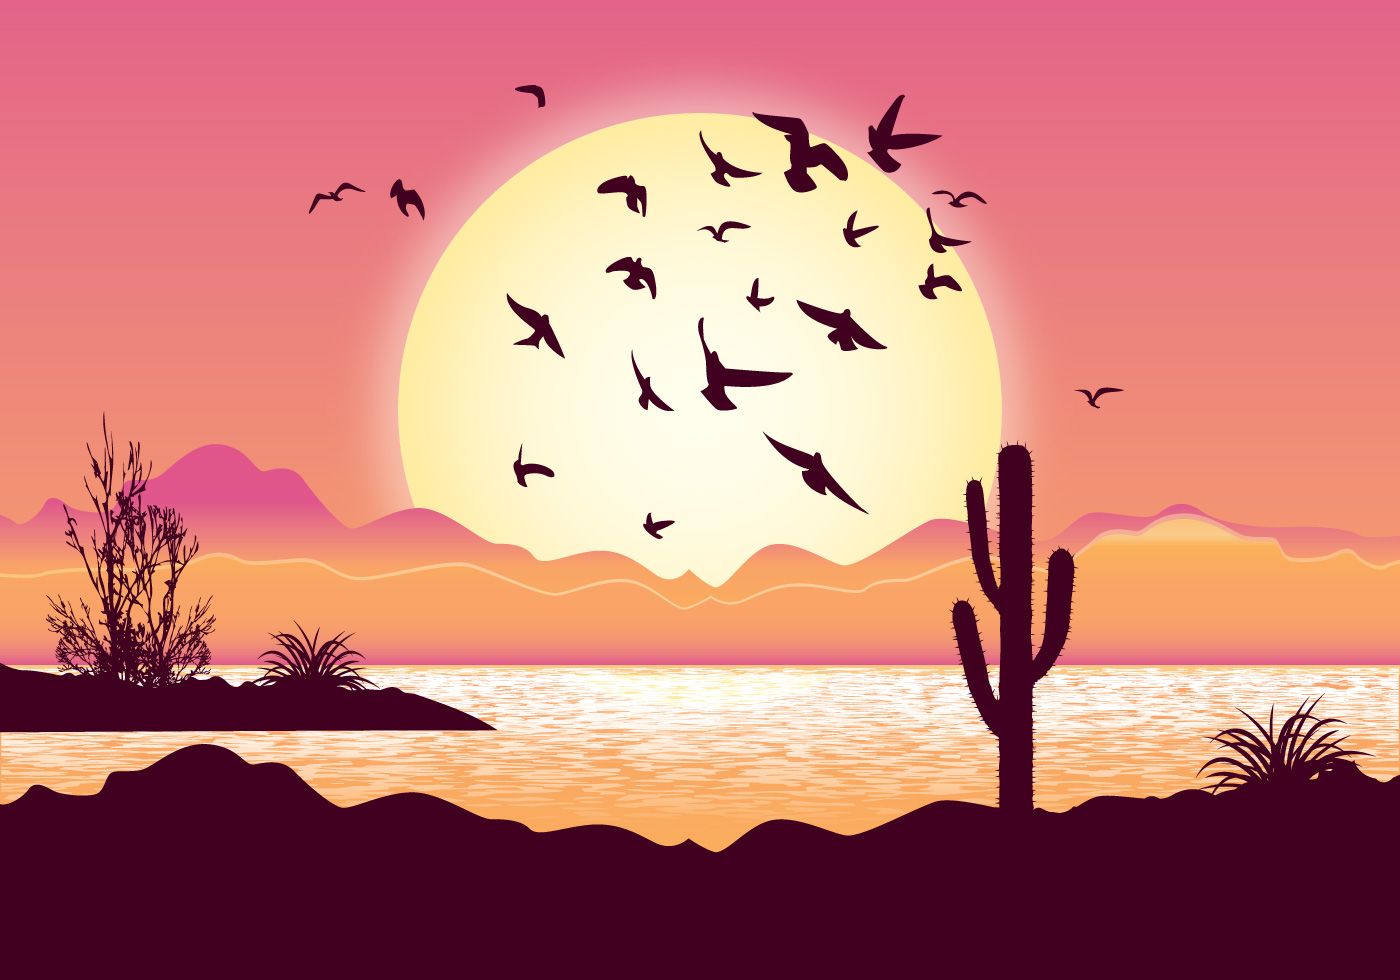 Flying Birds Illustration - Download Free Vector Art, Stock Graphics